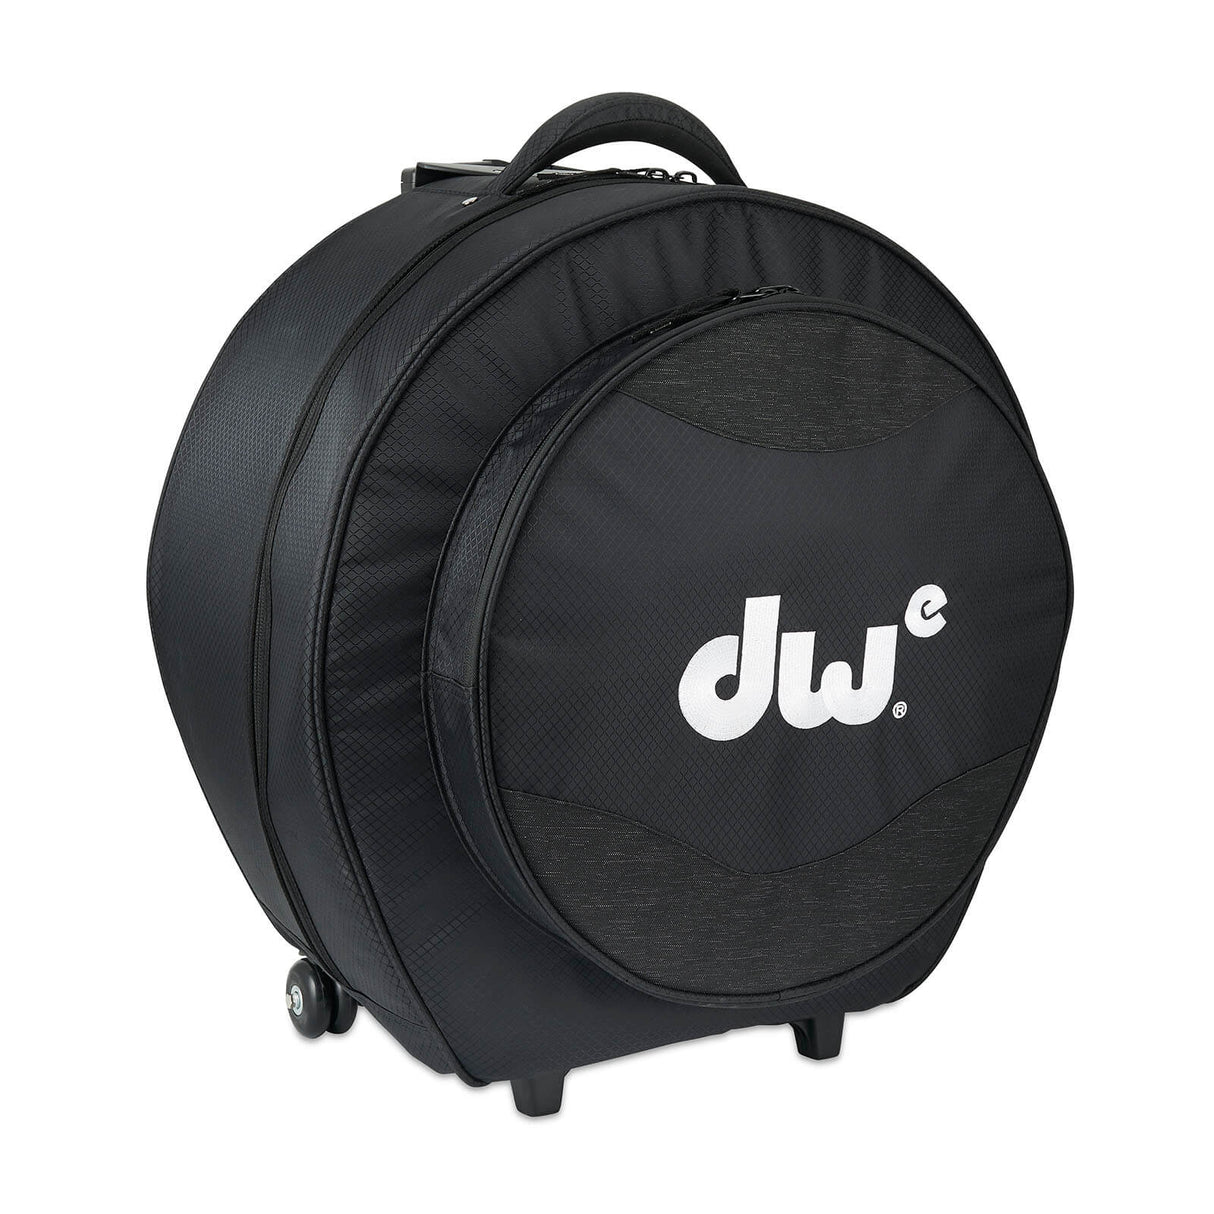 DW DWe Multi-Cymbal Soft Case w/Wheels & Retractable Handle